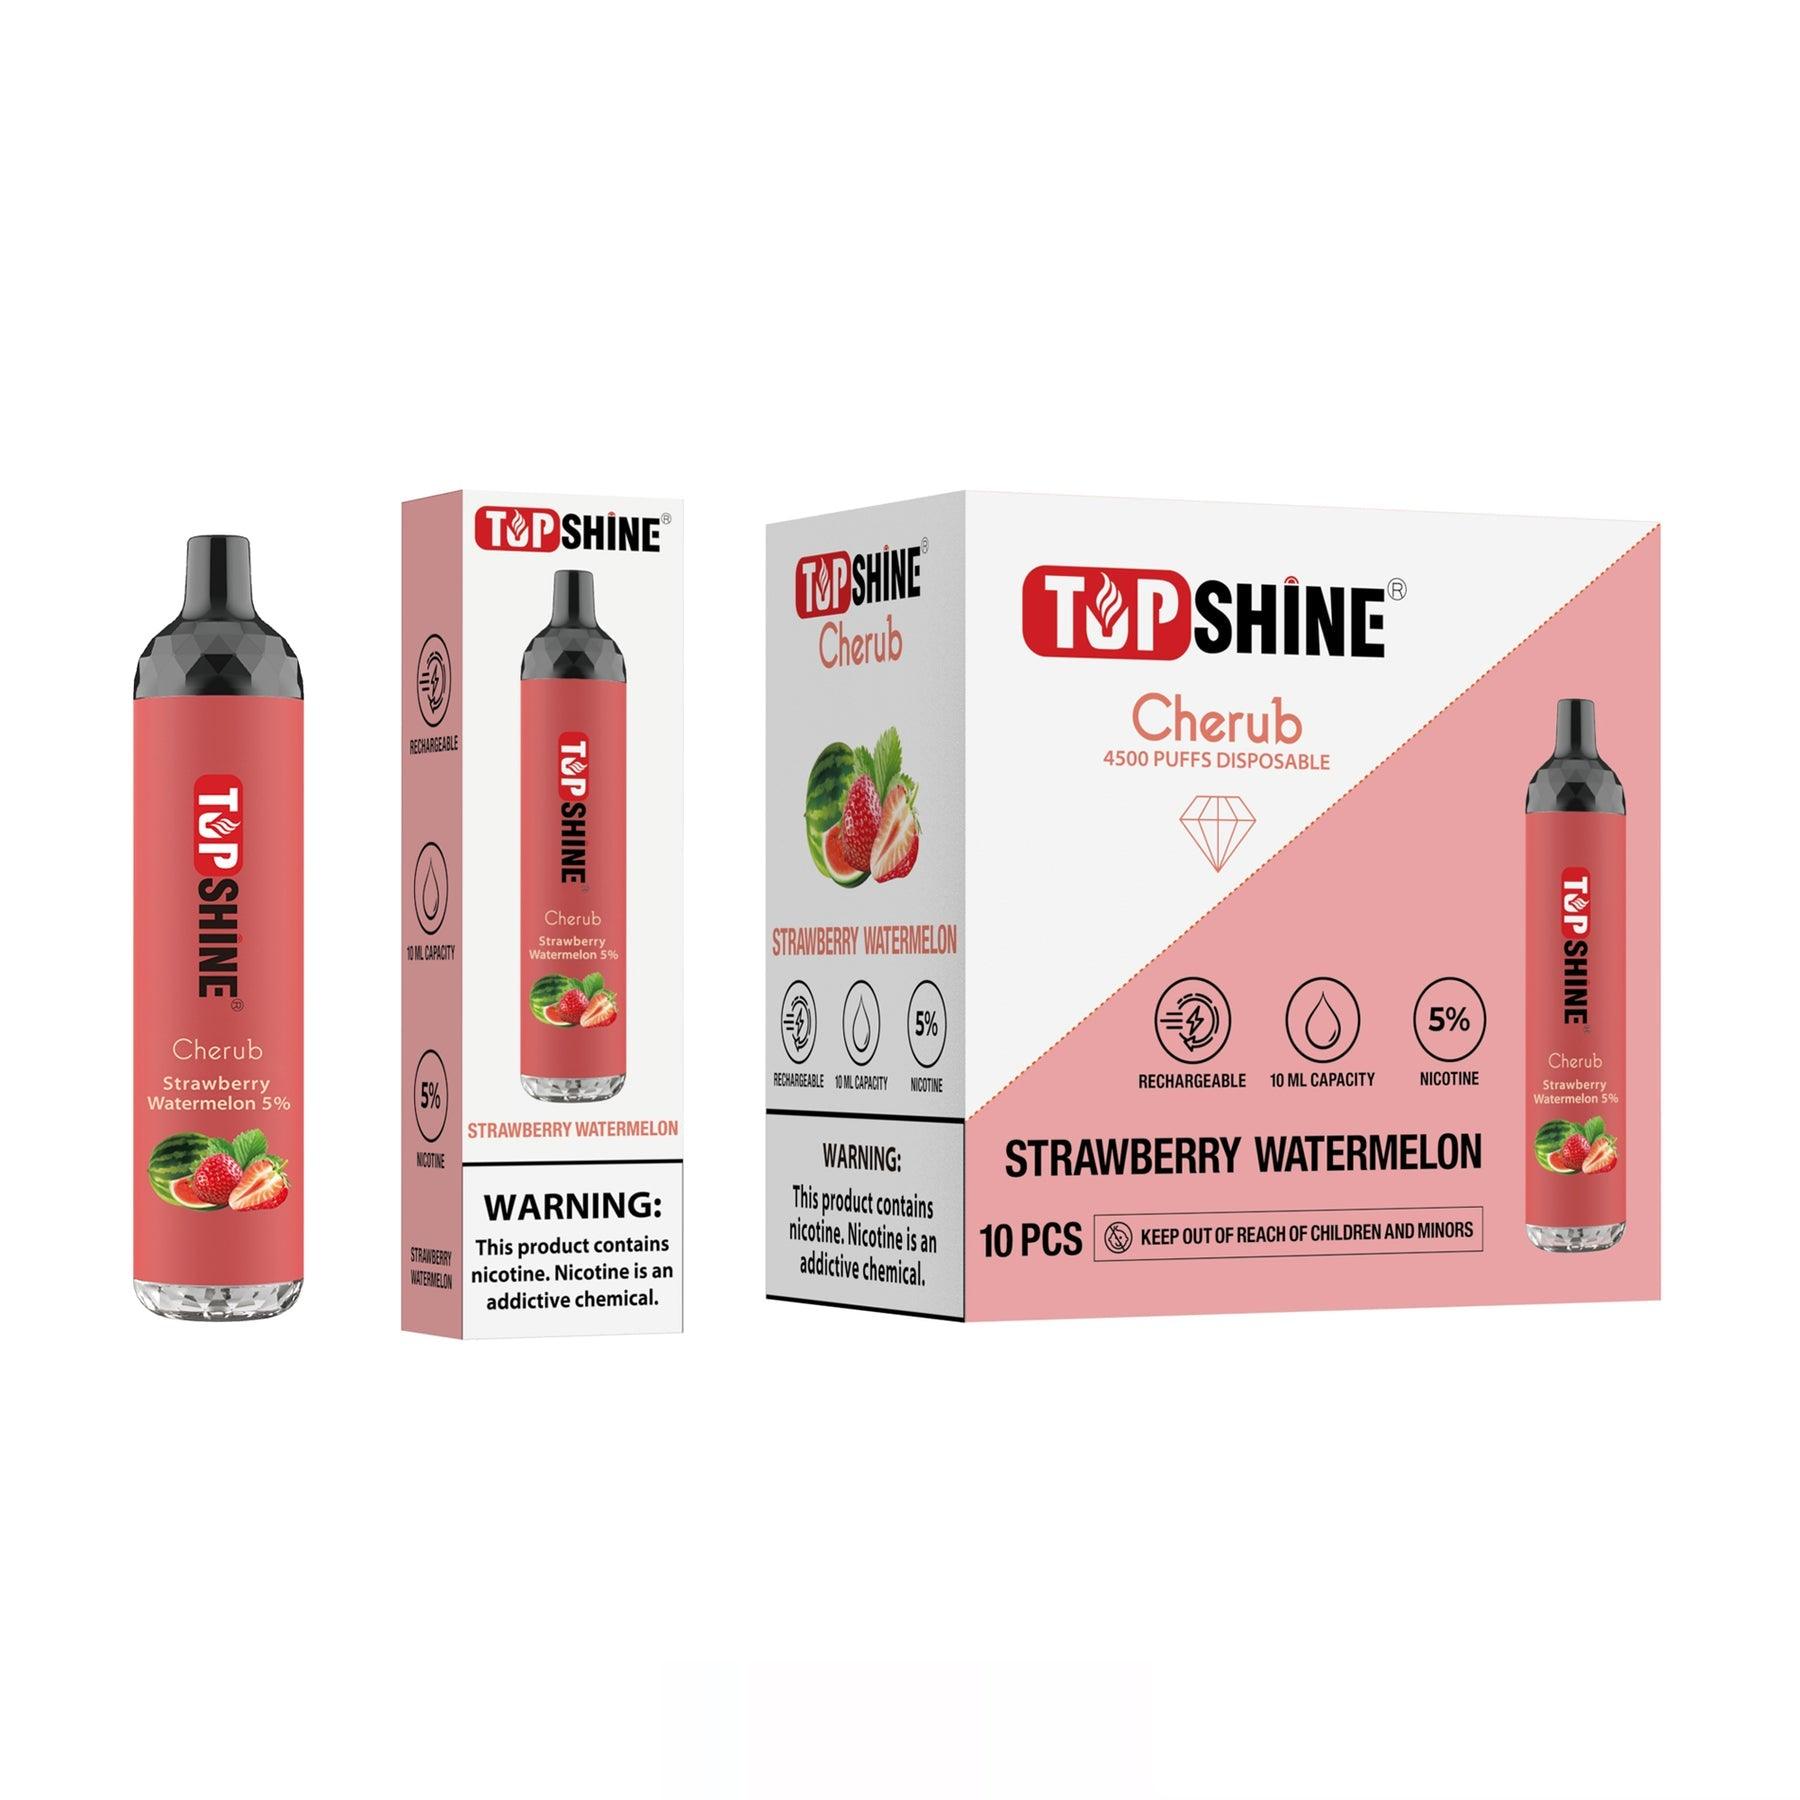 Top Shine Cherub Disposable Vape Device - Lavoo